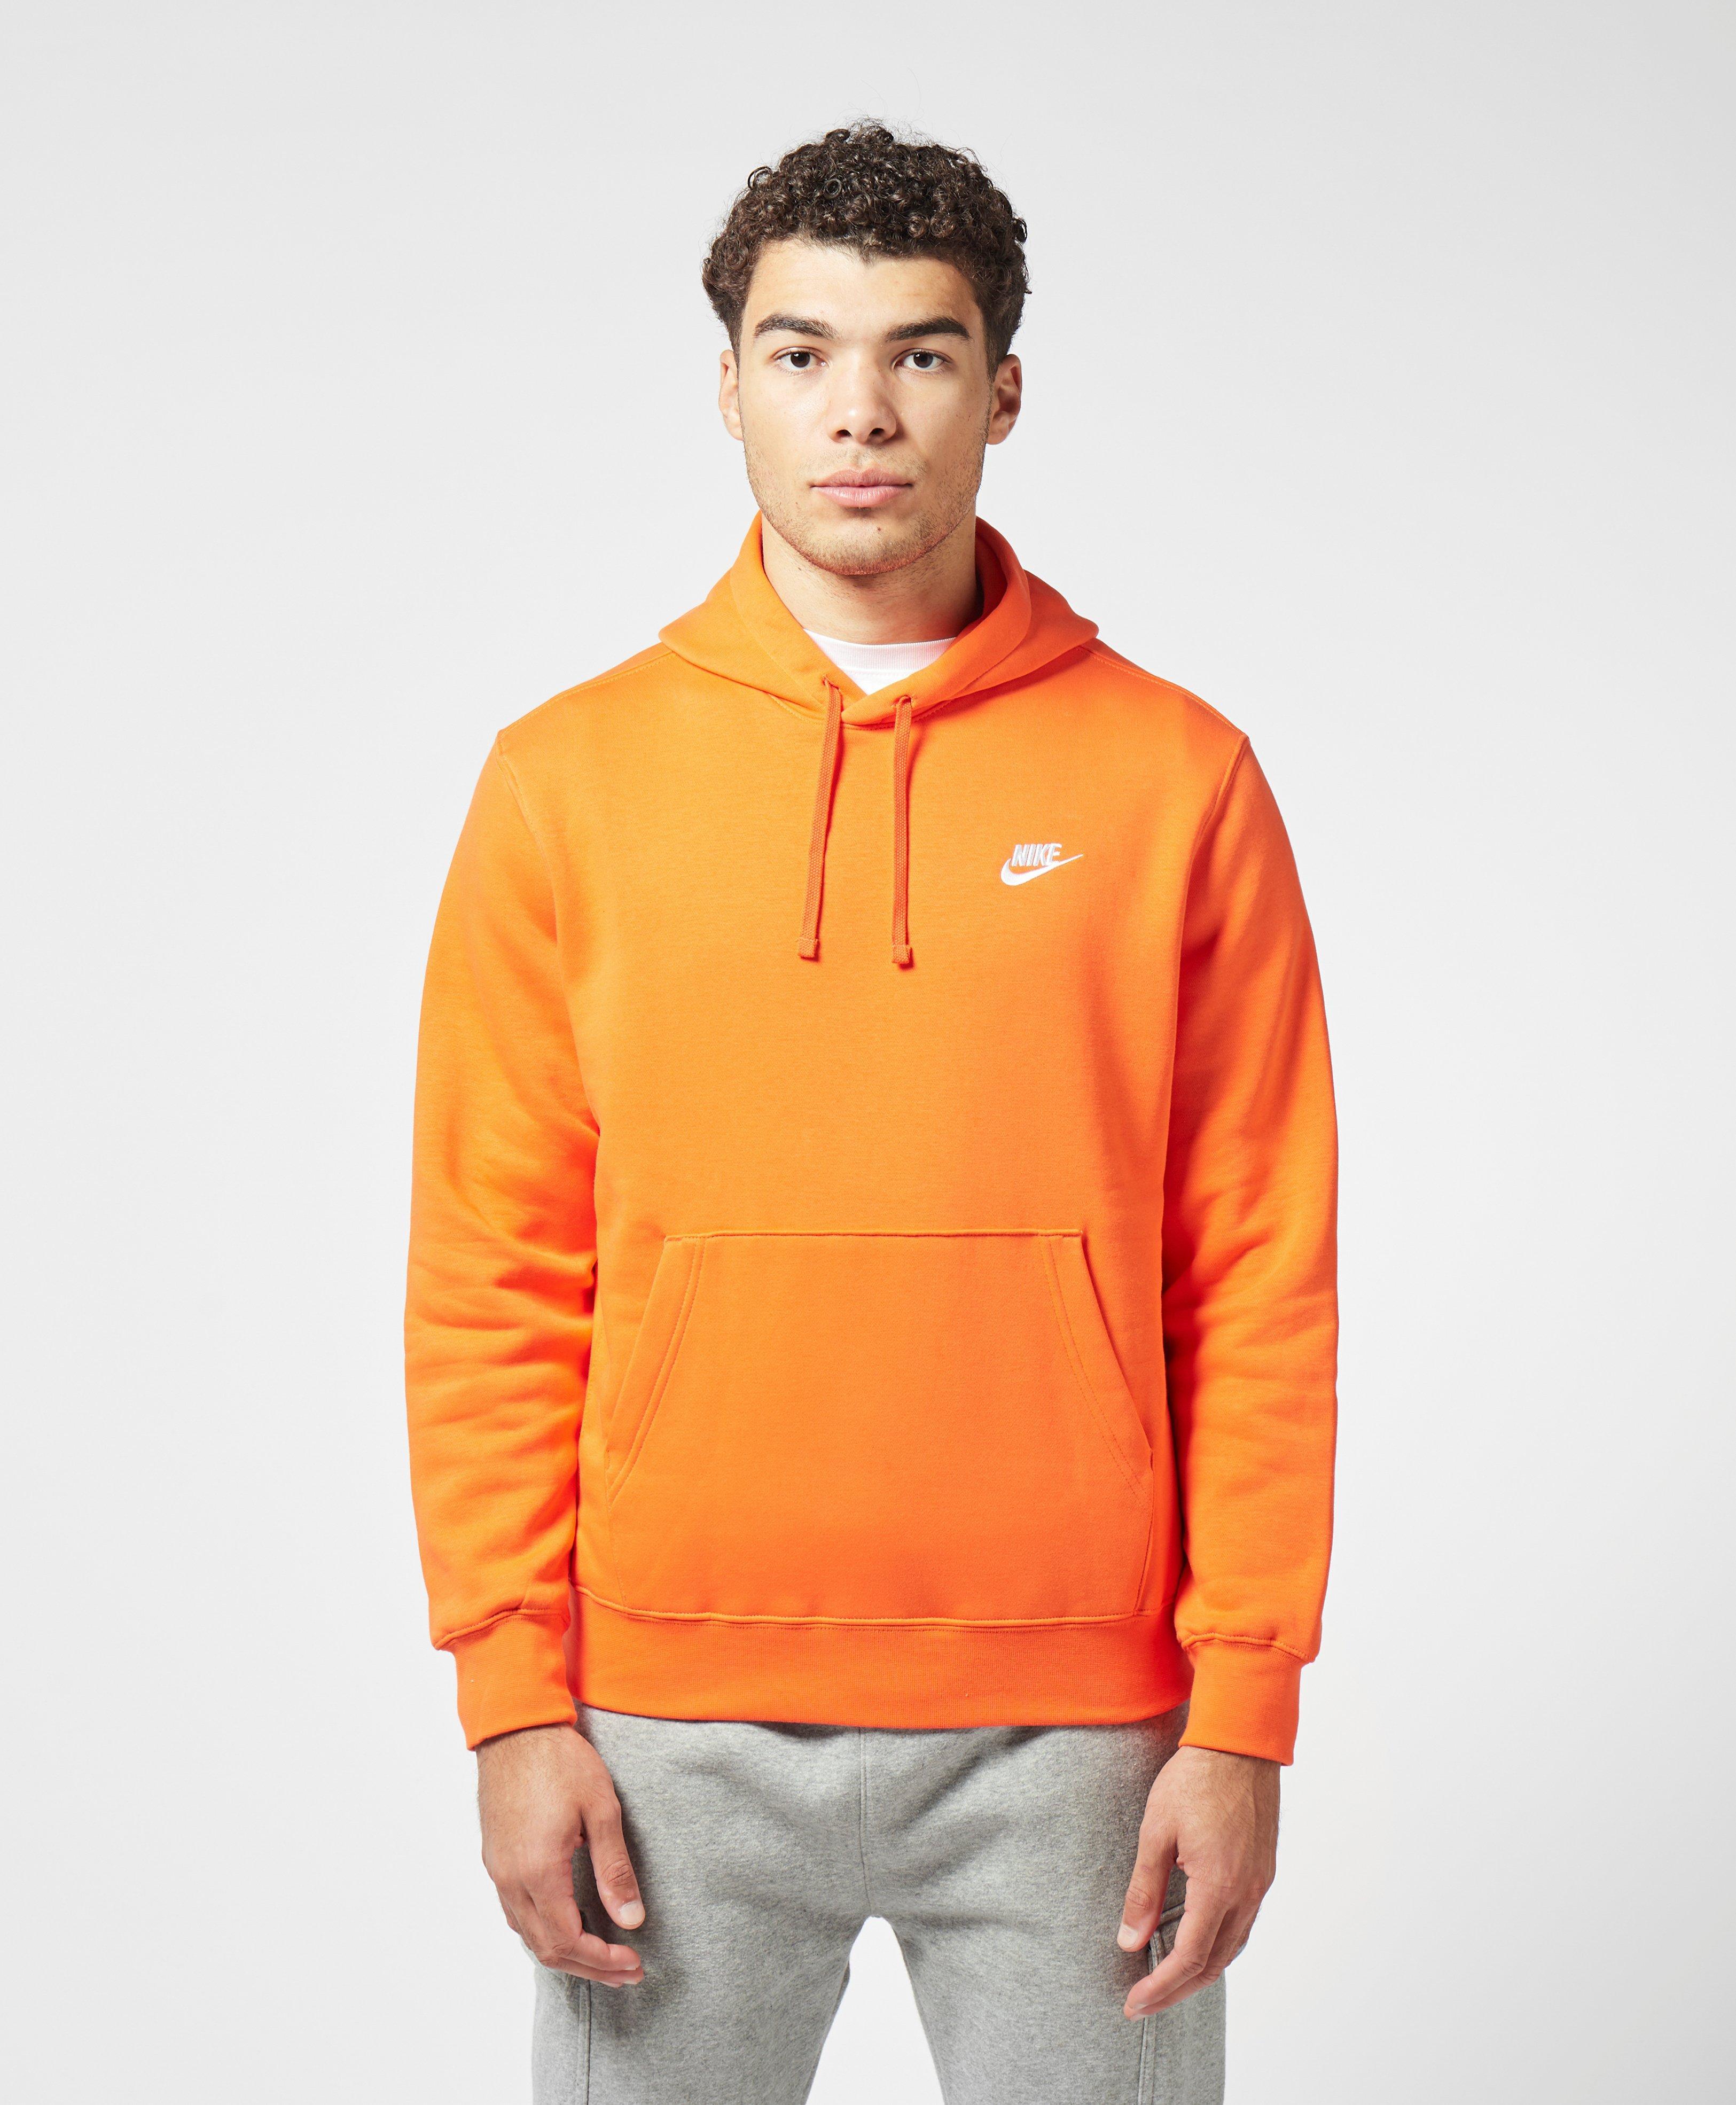 Nike Foundation Overhead Hoodie in Orange for Men - Lyst